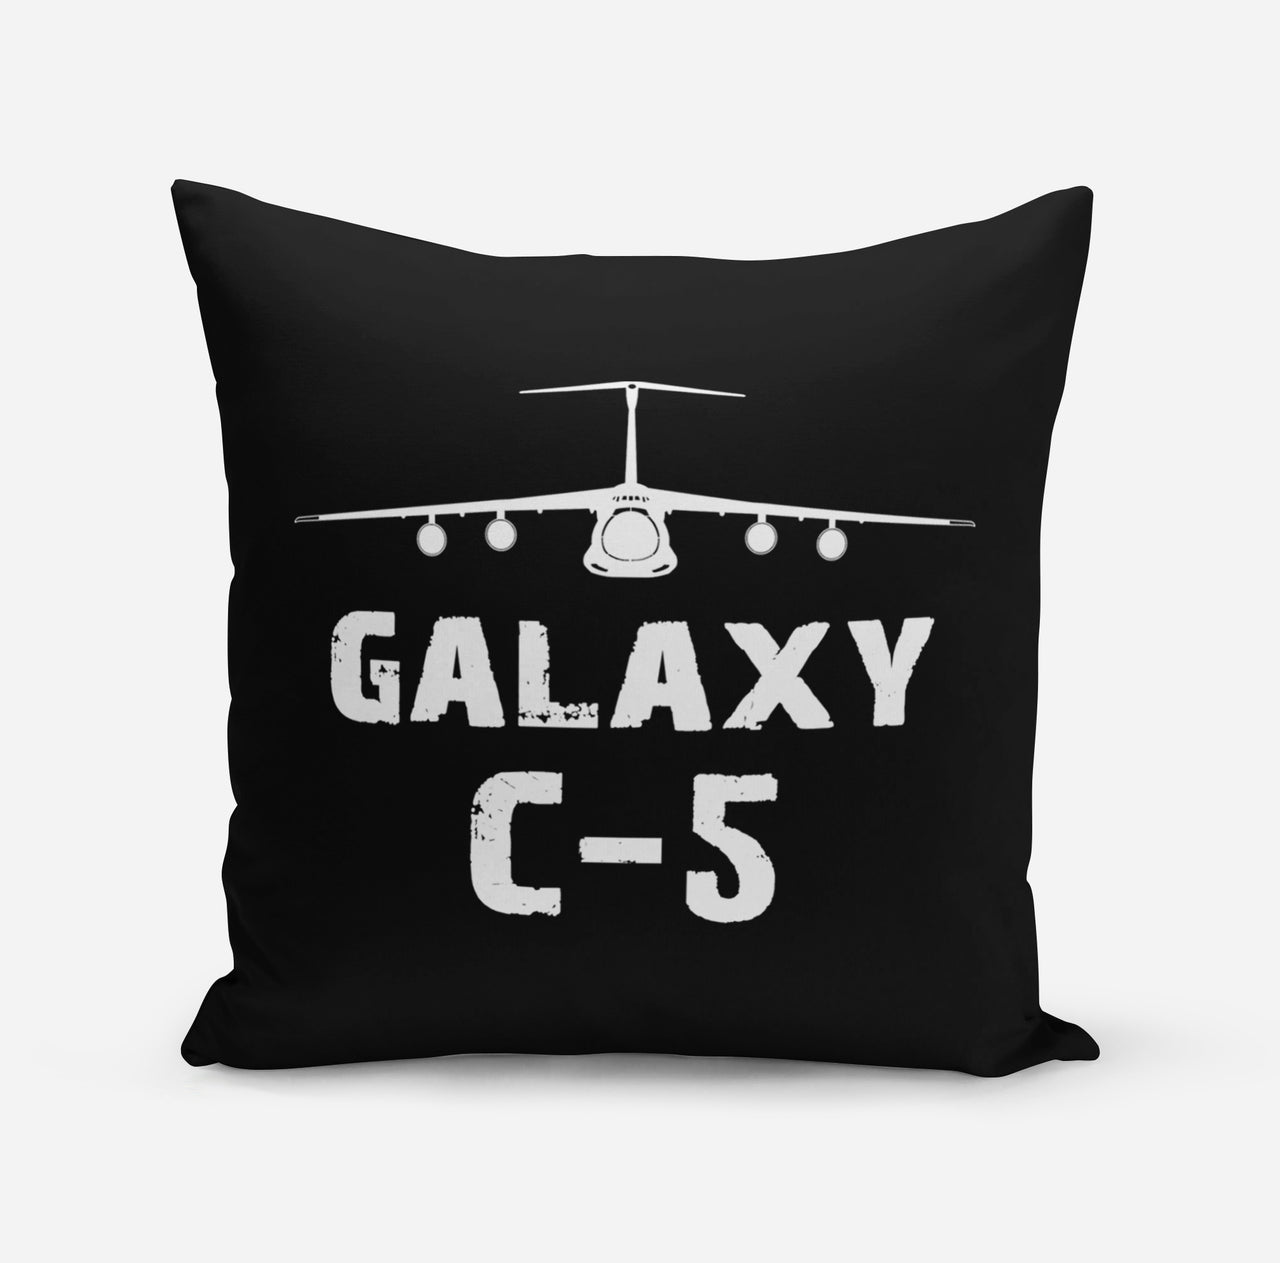 Galaxy C-5 & Plane Designed Pillows